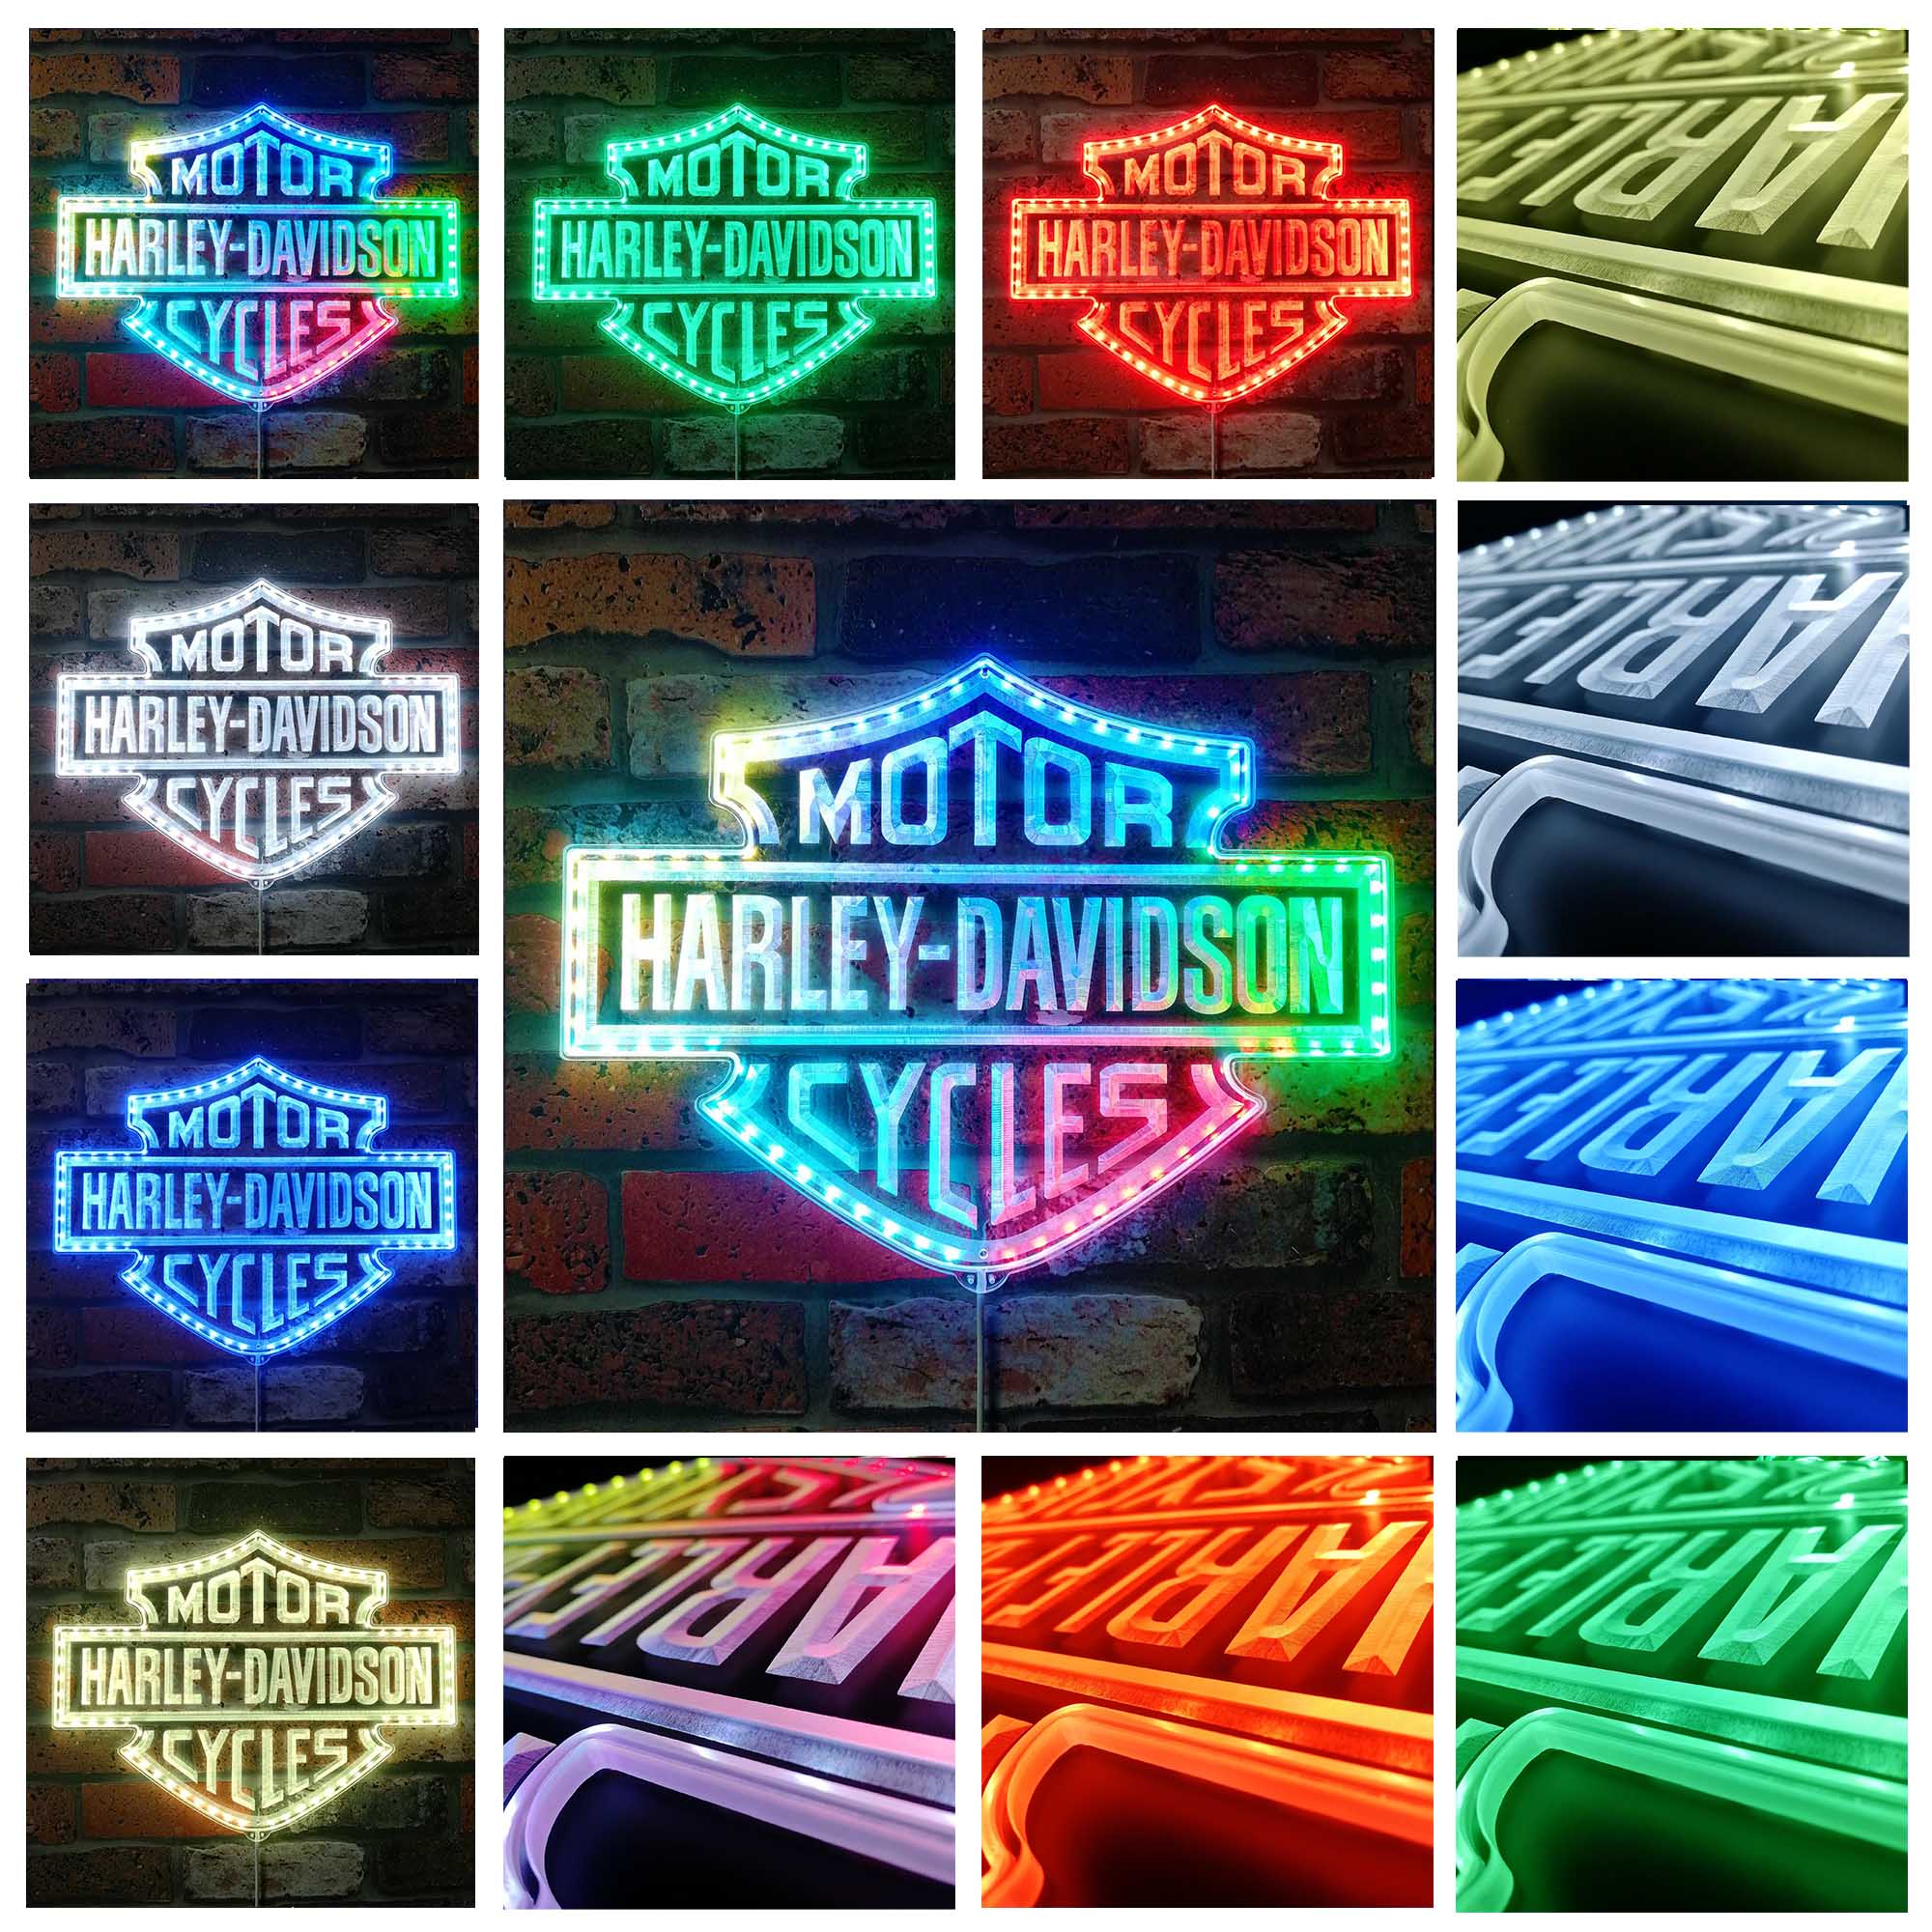 Harley Davidson Motorcycles Dynamic RGB Edge Lit LED Sign